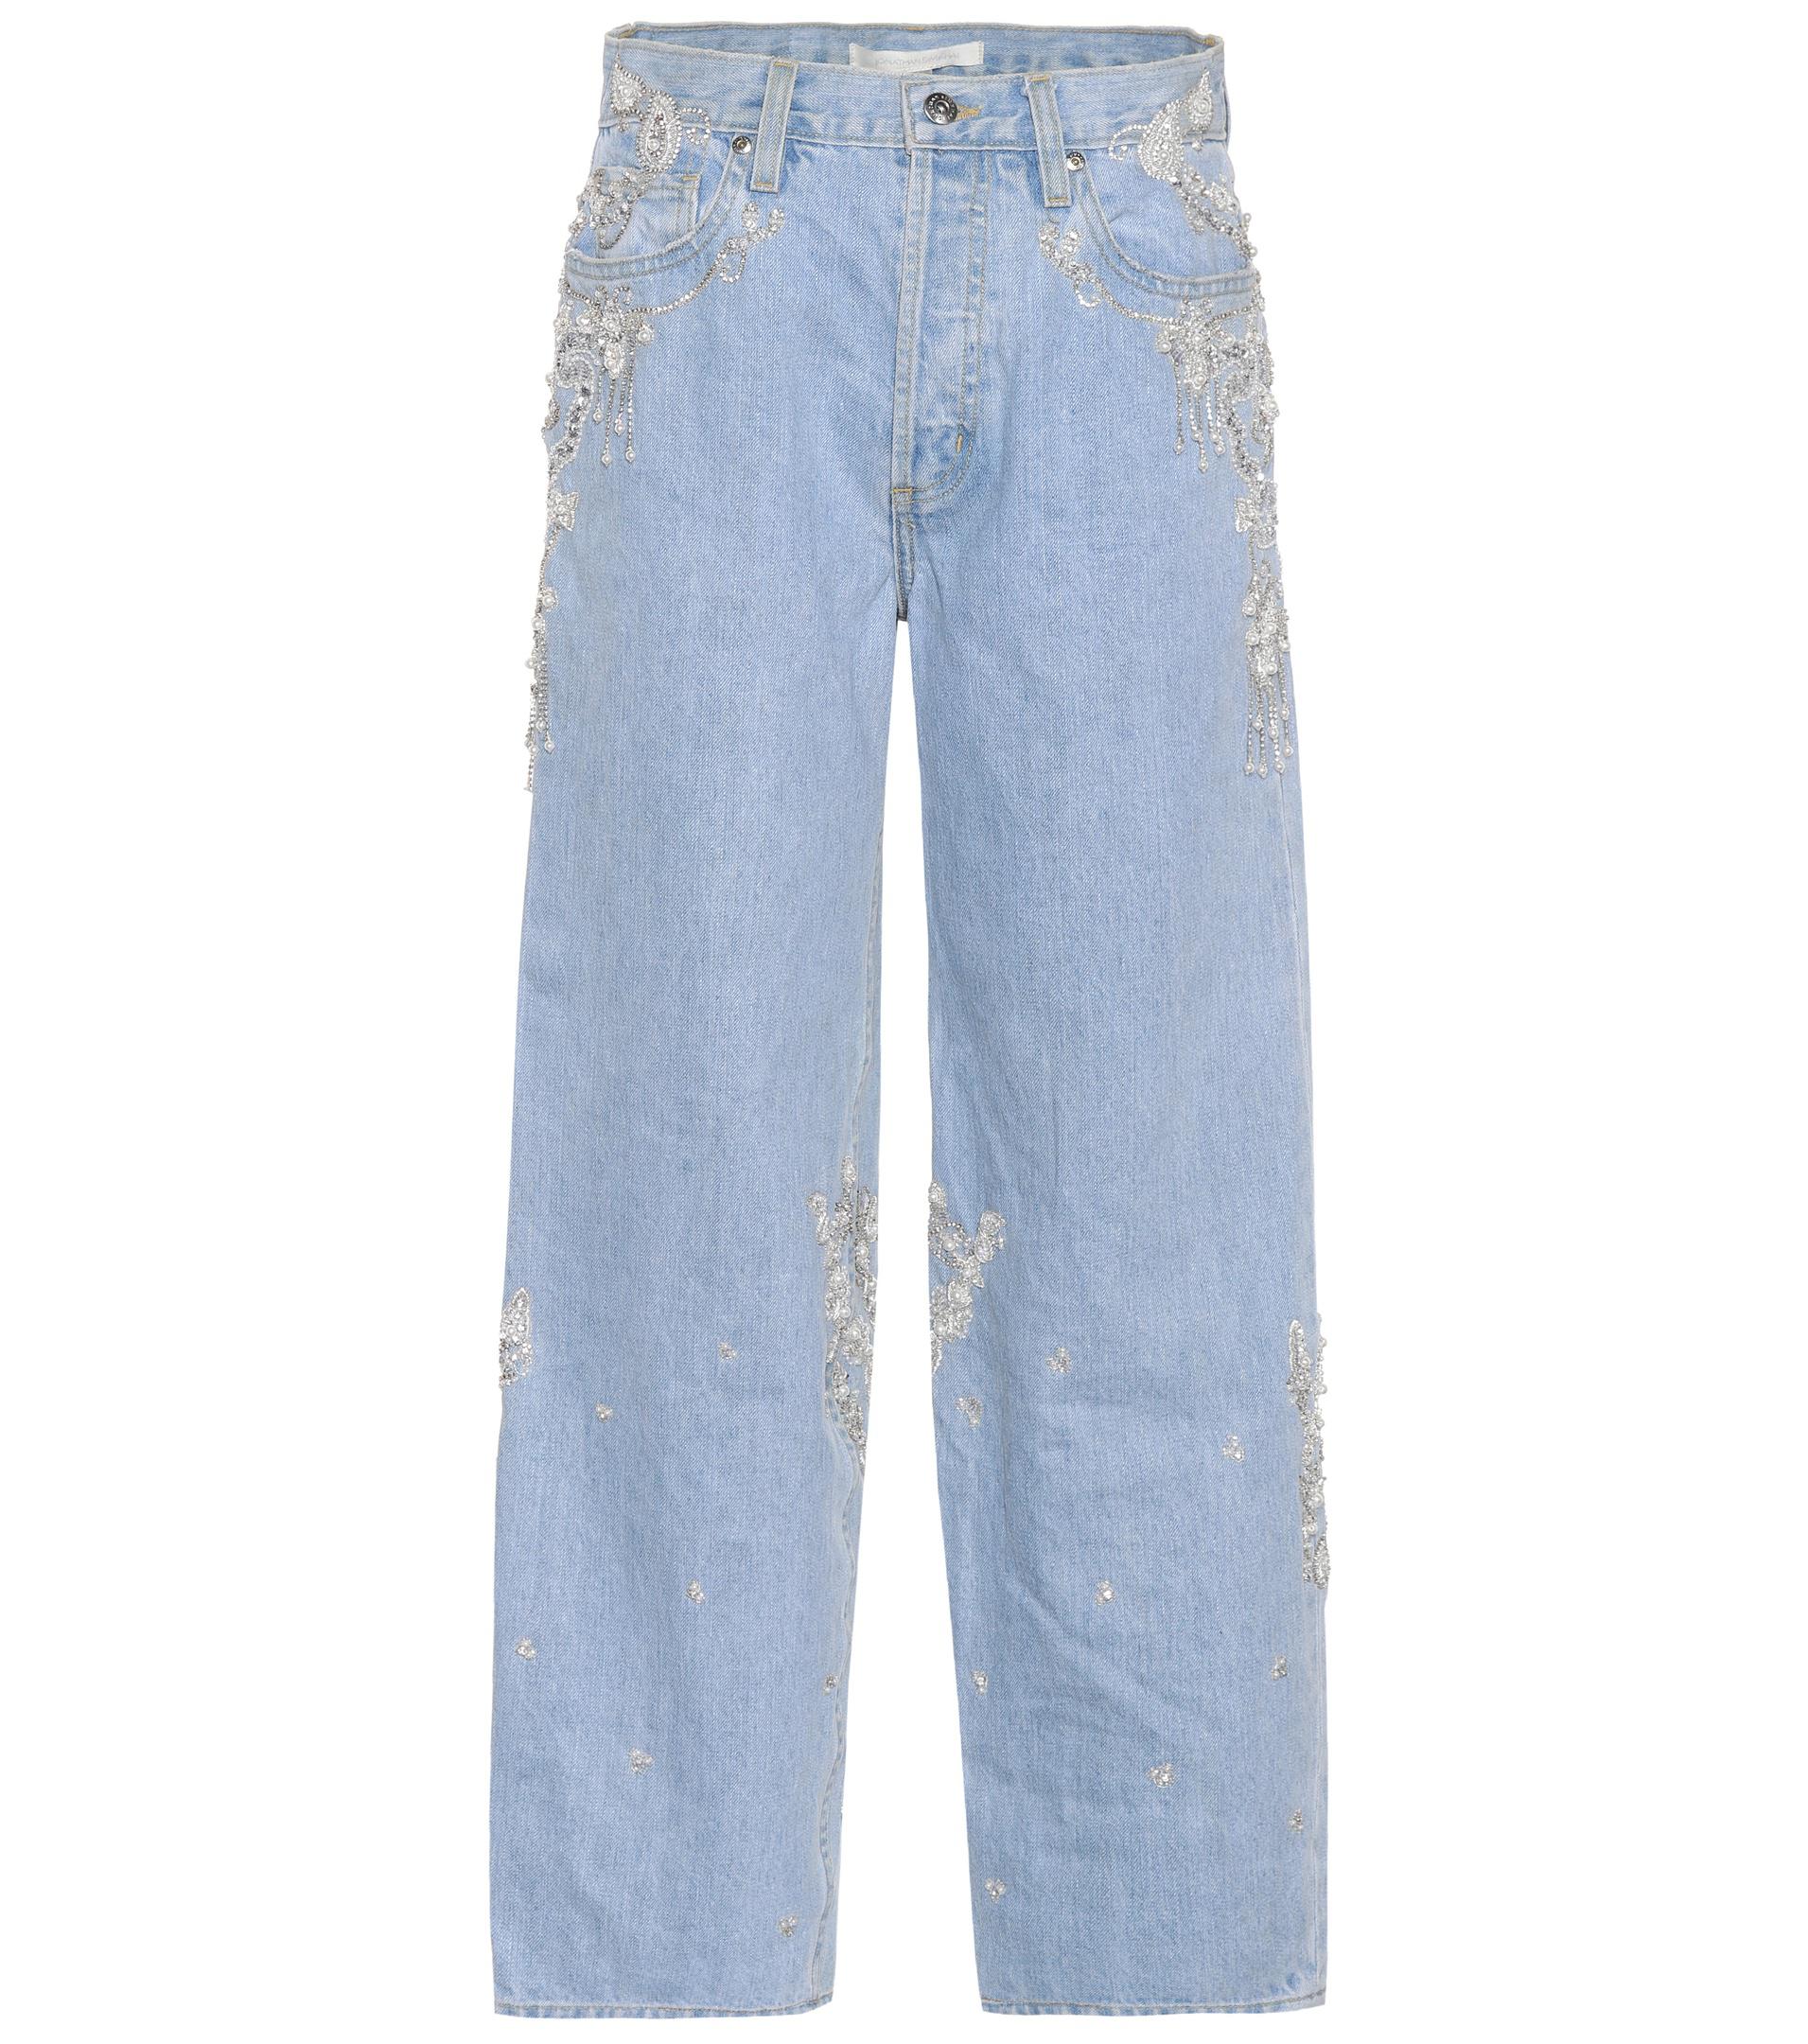 Jonathan Simkhai Denim Embellished Jeans in Blue - Lyst